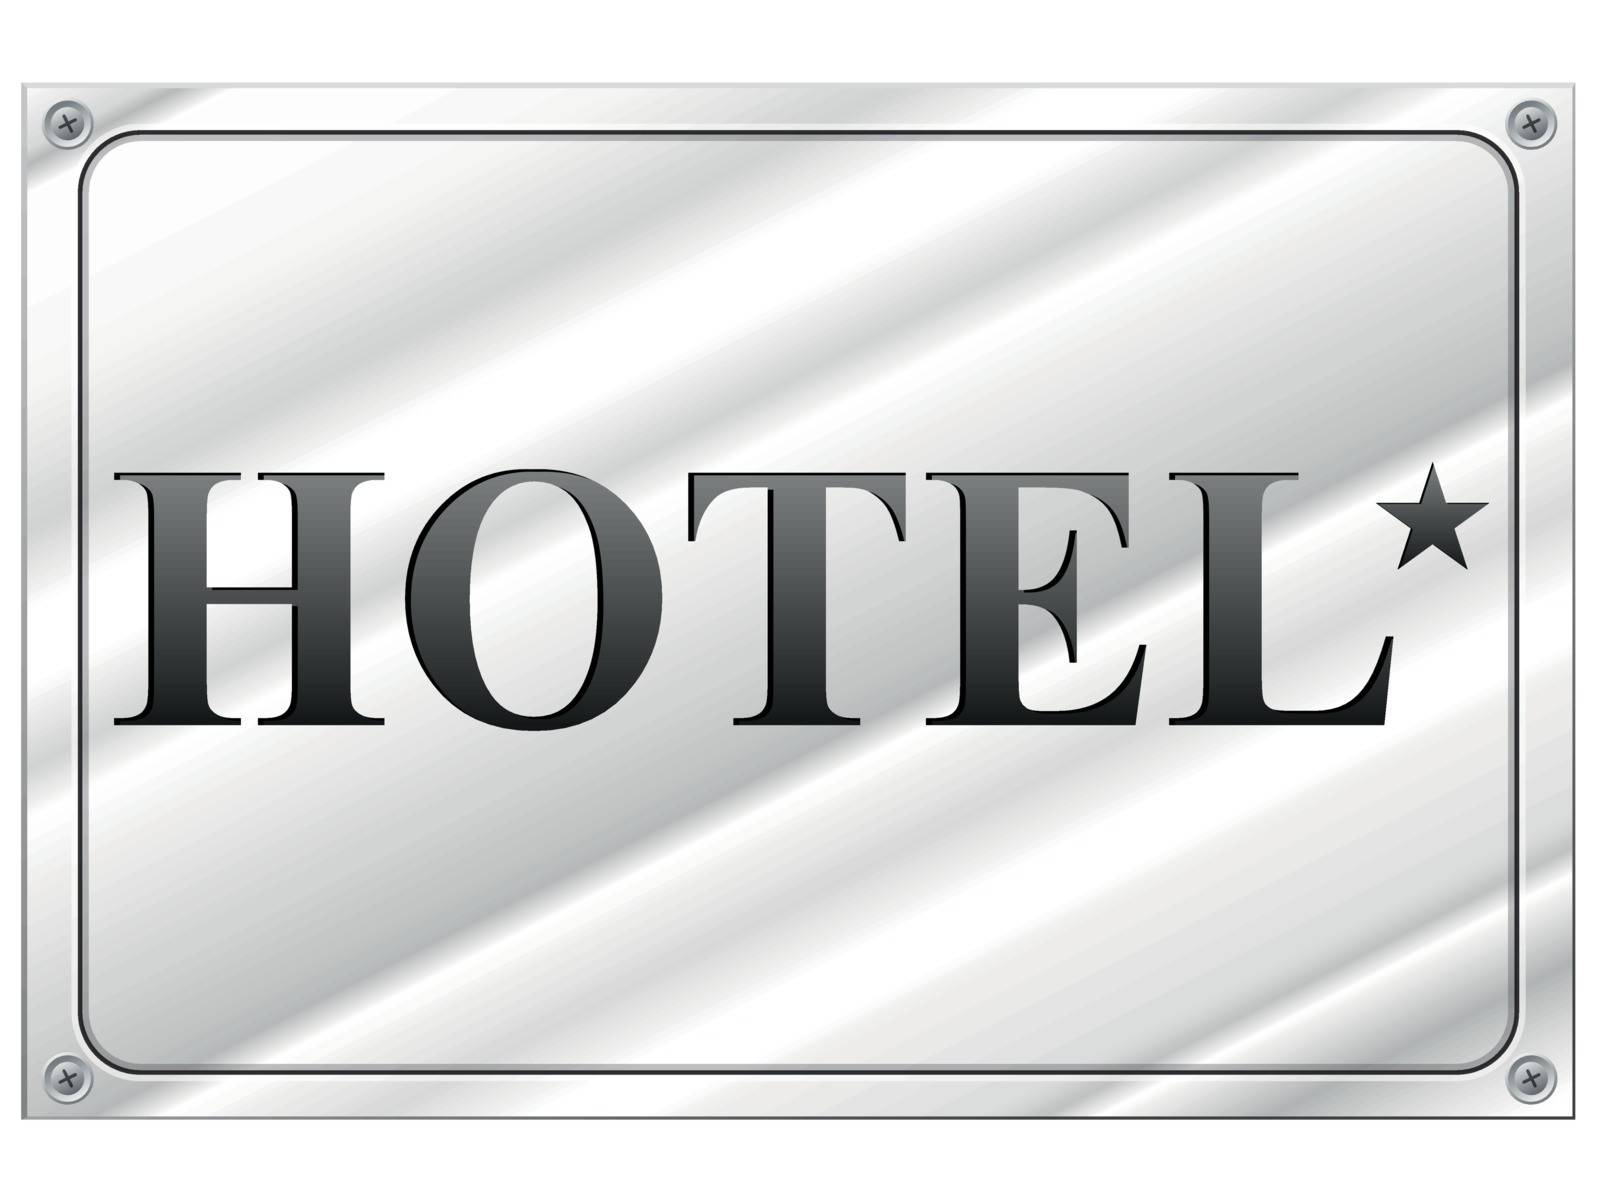 vector illustration of hotel panel on white background